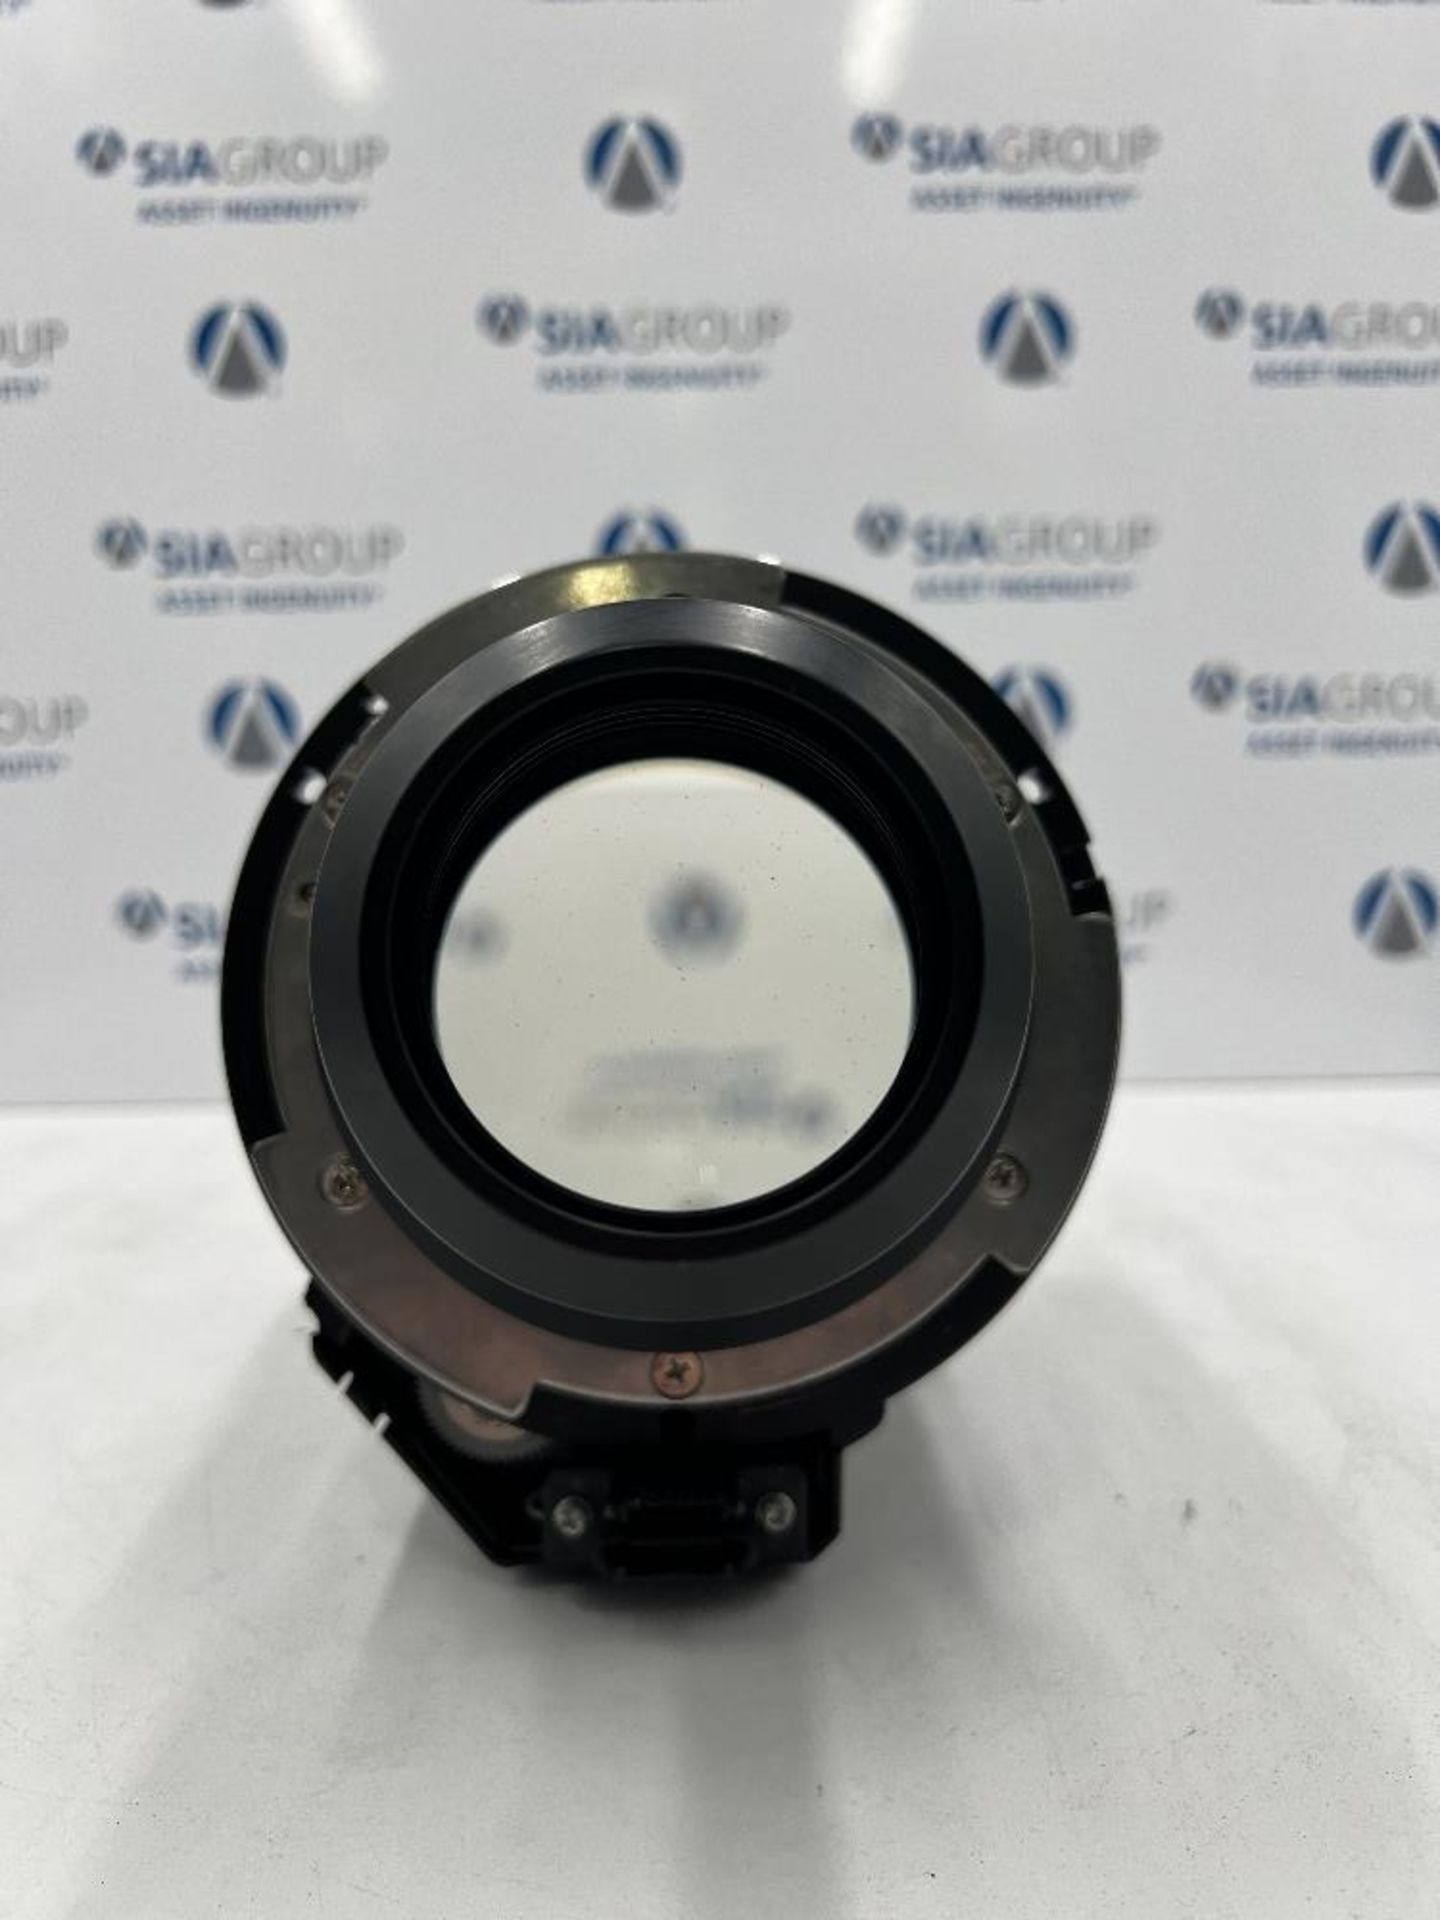 Panasonic ET-D75LE10 1.3-1.7 Zoom Lens With Carrier Case - Image 4 of 10